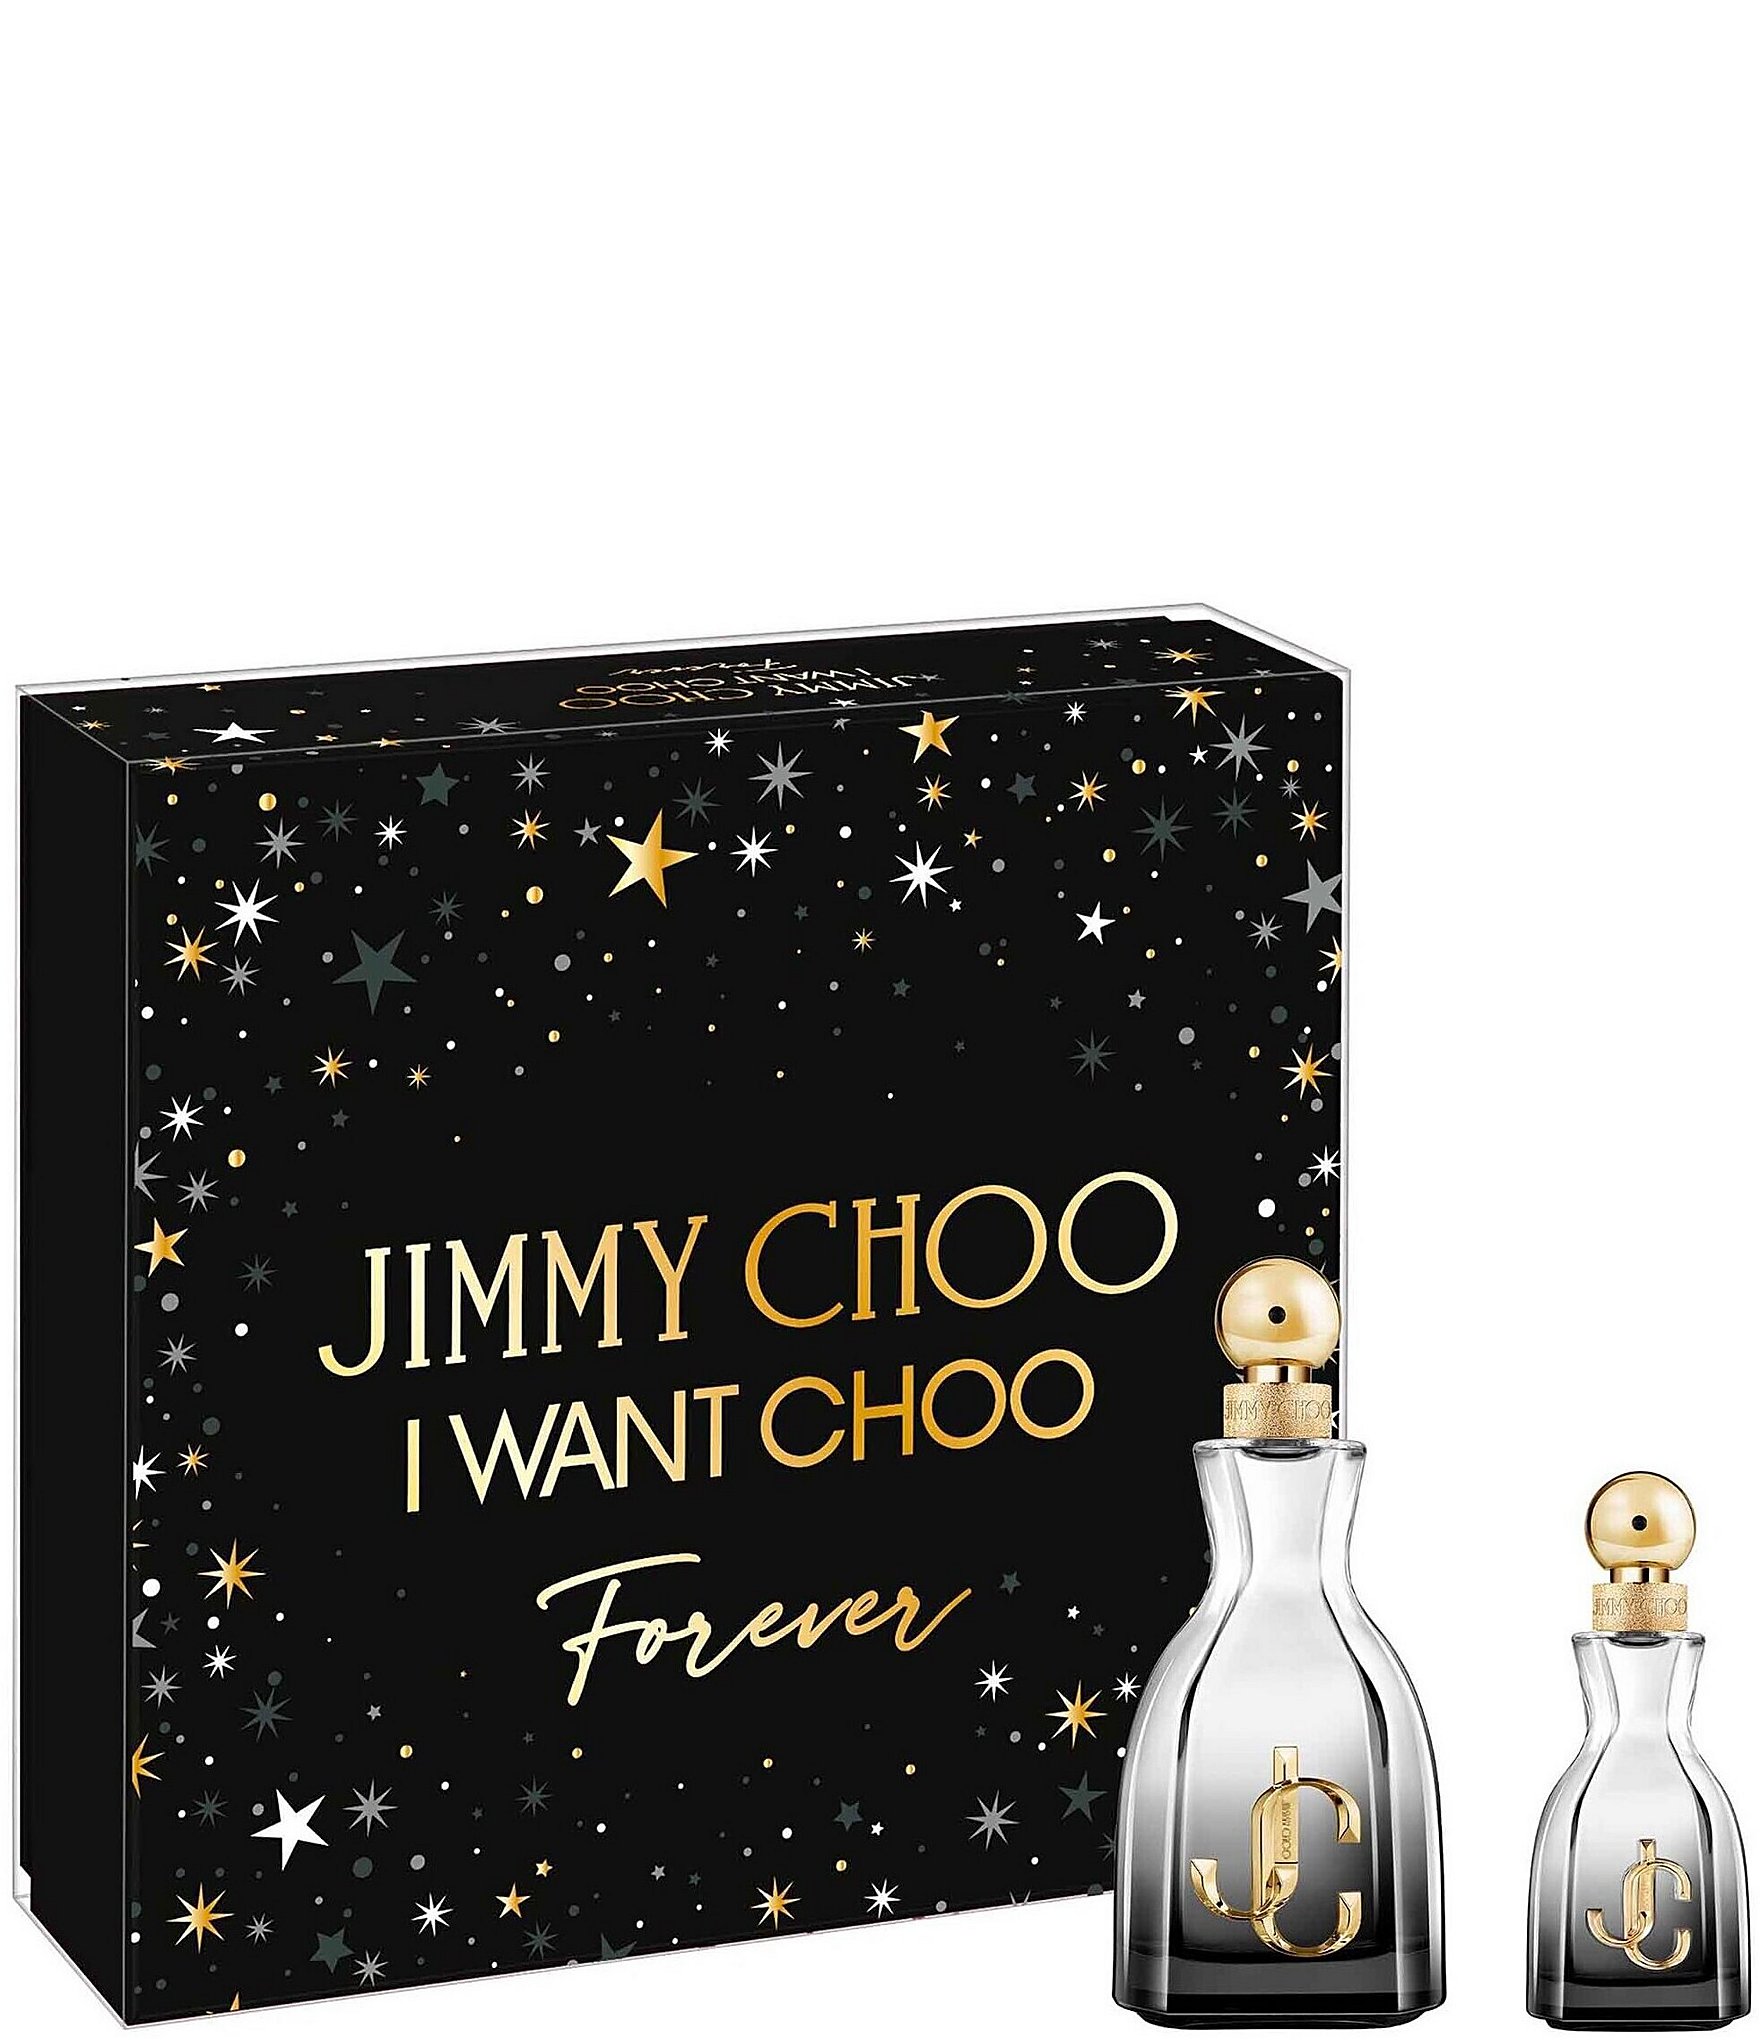 Jimmy Choo I Want Choo Forever Eau De Parfum 100ml